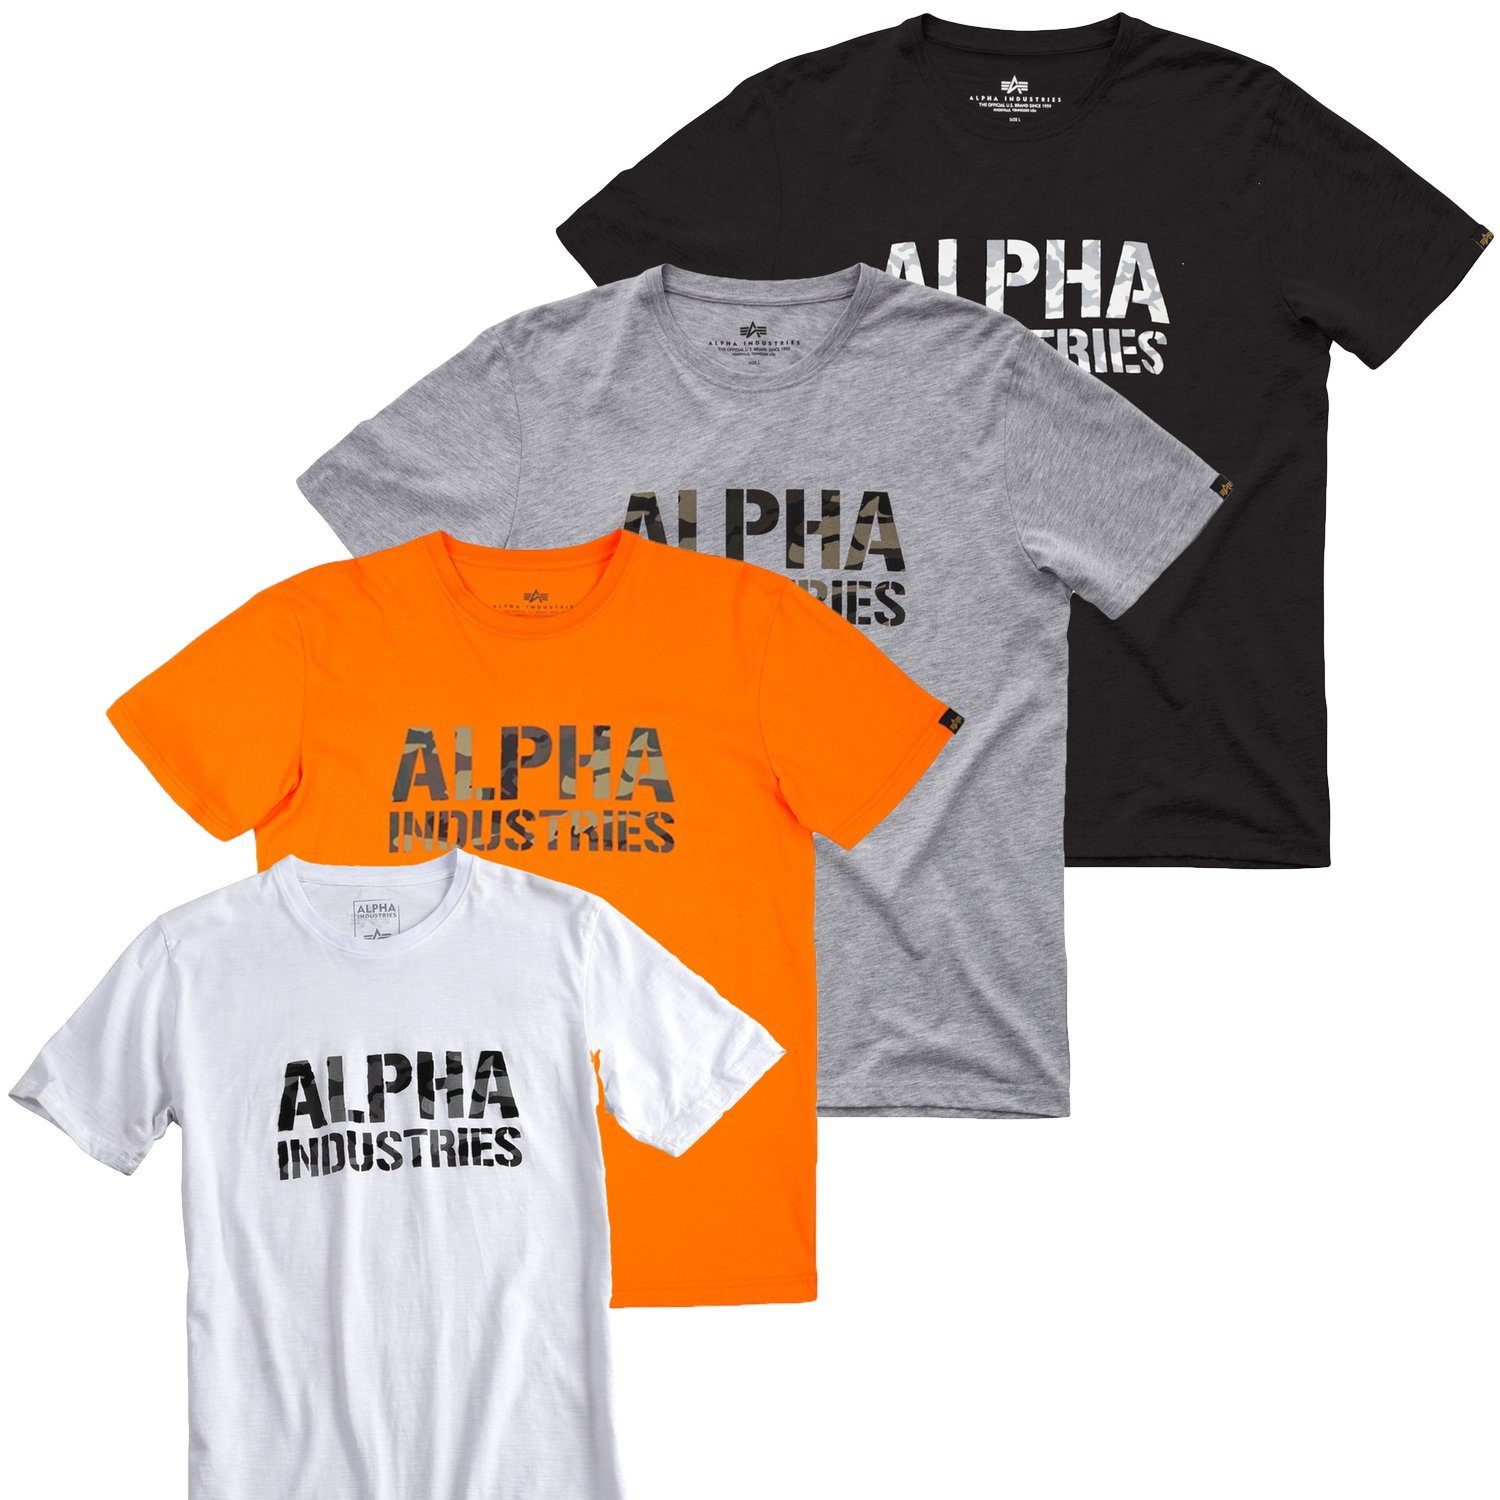 Alpha white/digi Industries Camo T Industries T-Shirt Print camo Alpha T-Shirt black Adult